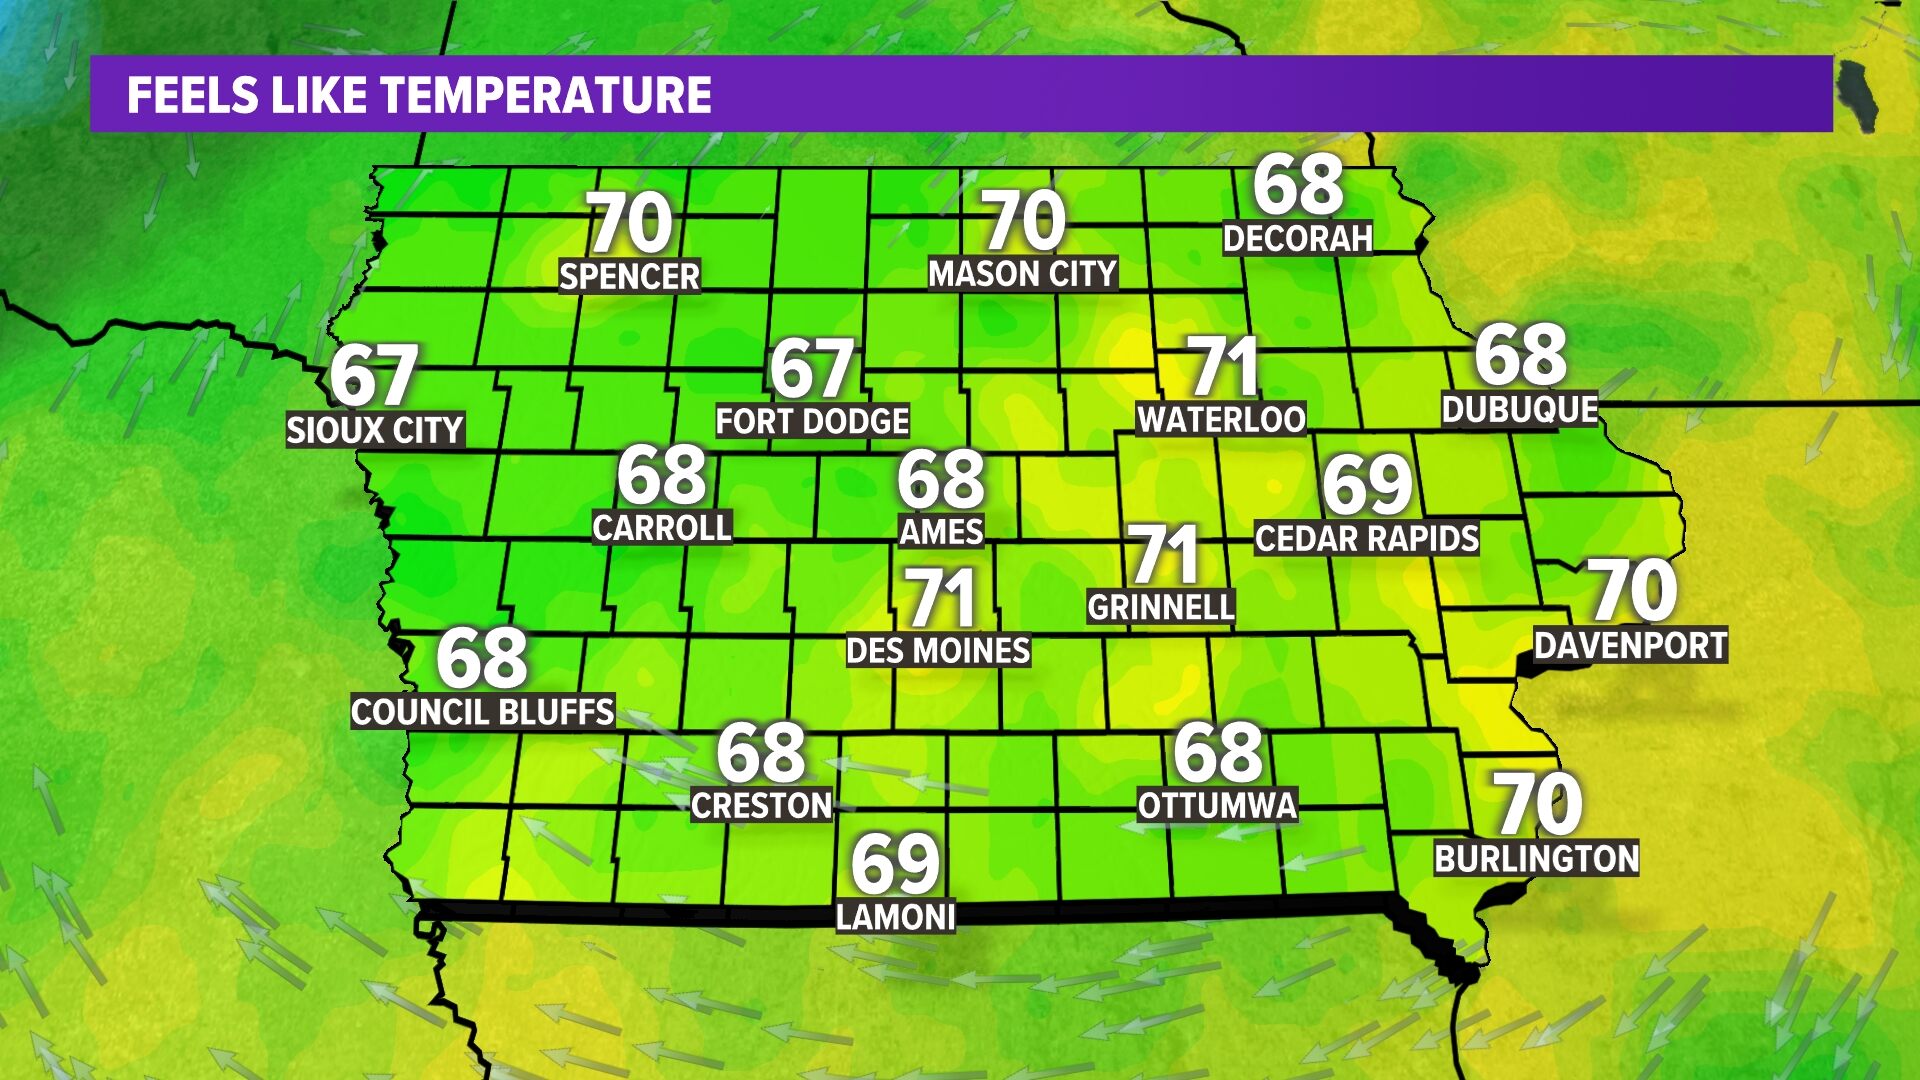 Iowa Feels Like Temperatures